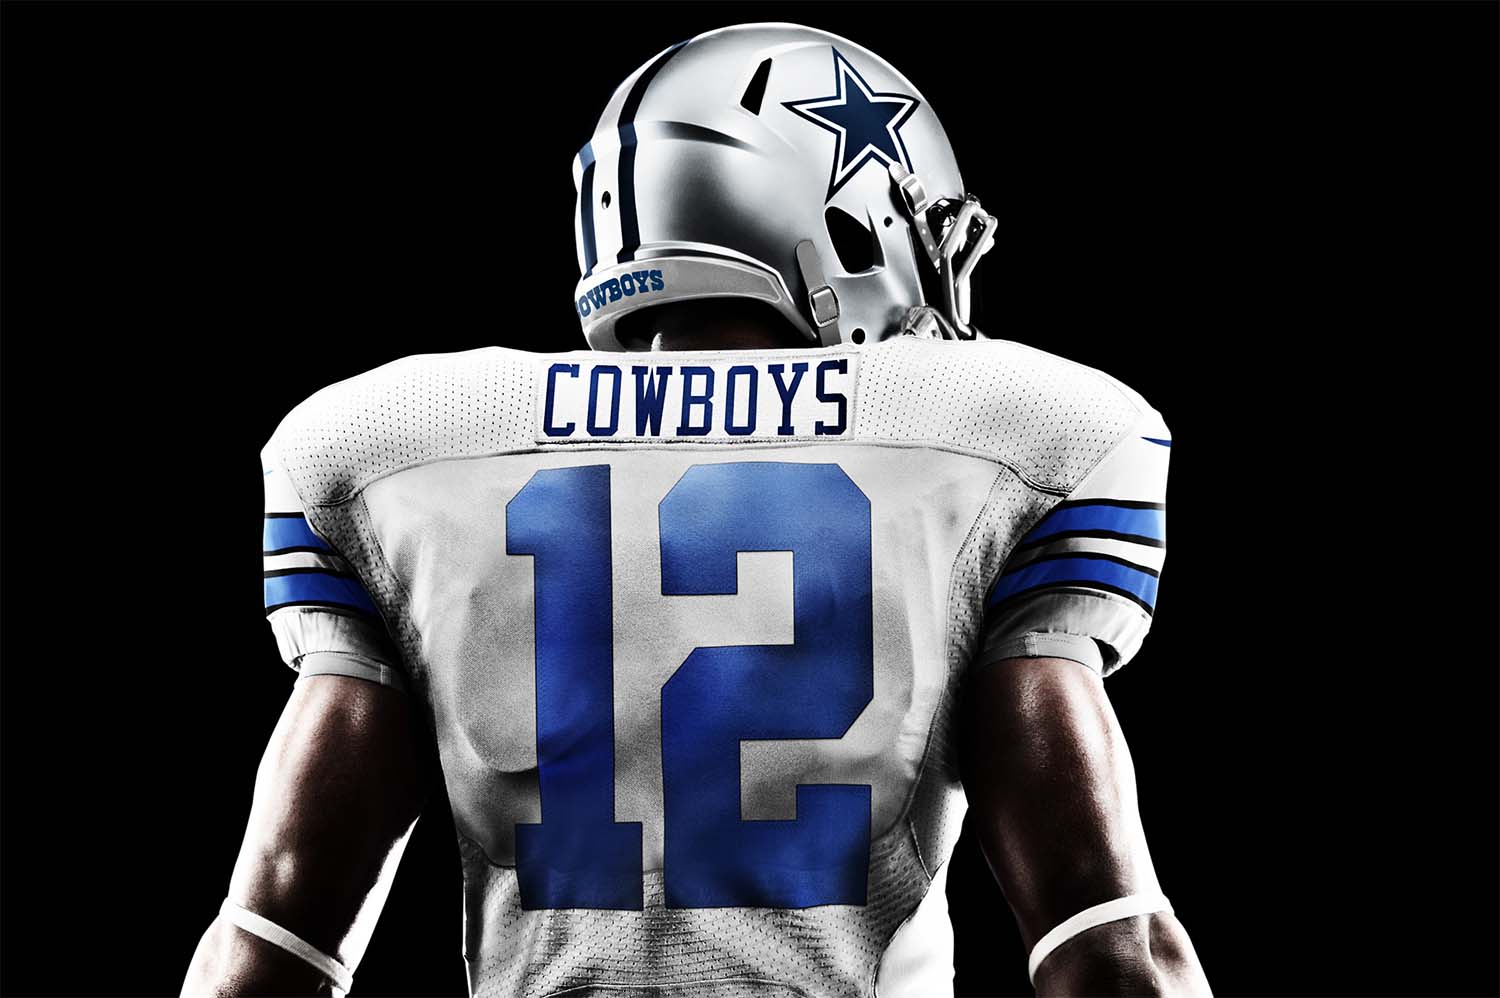 Dallas Cowboys Uniforms. THE BOYS ARE BACK